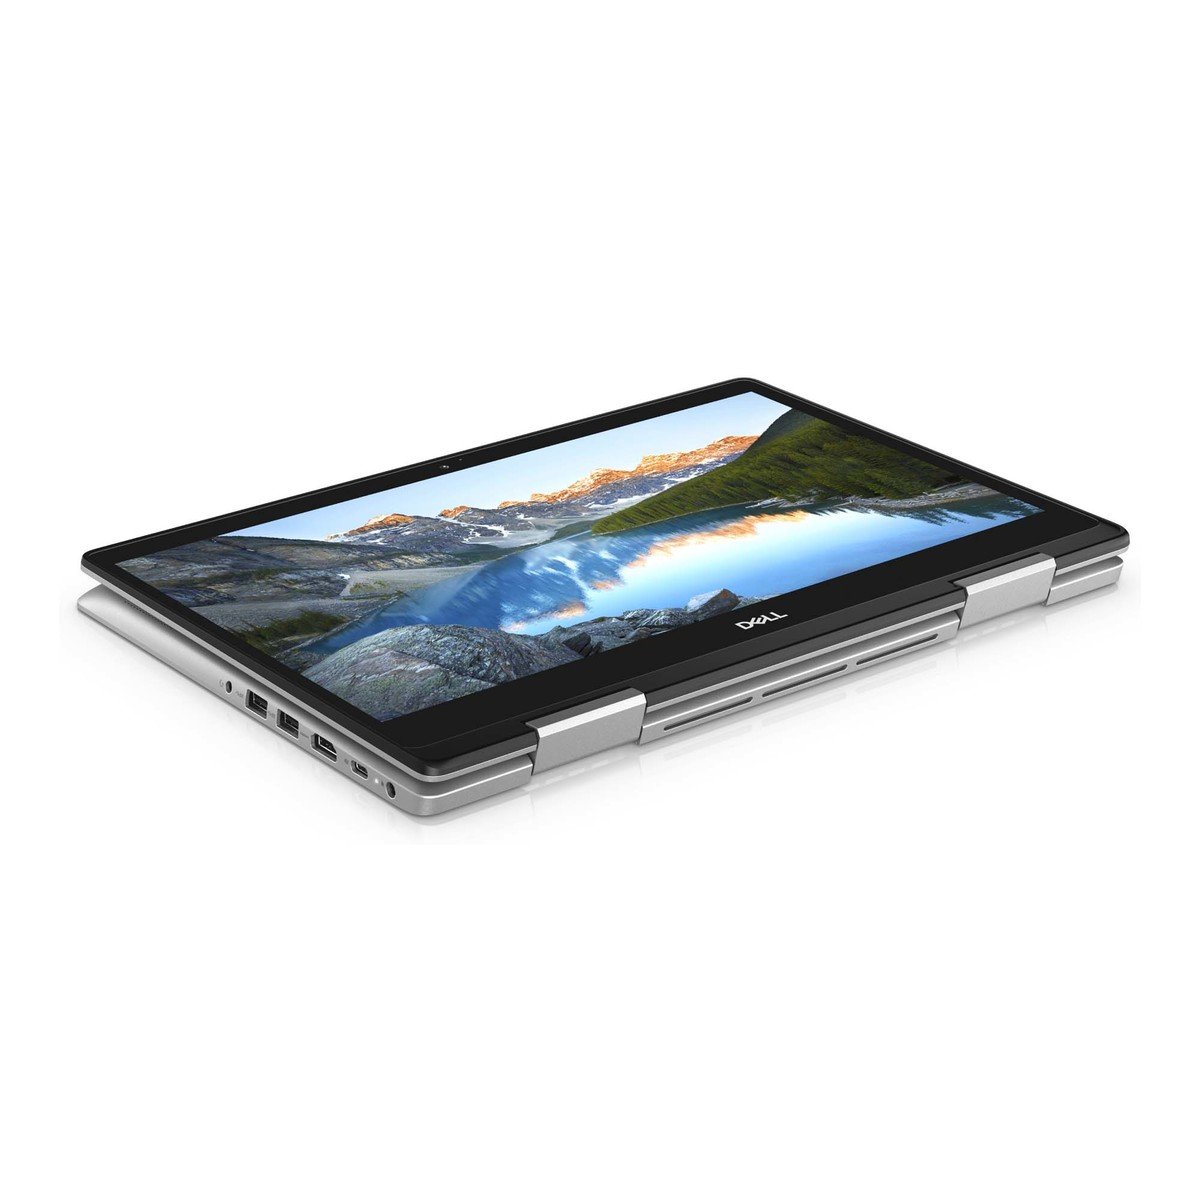 Dell 2in1 Laptop 5491 Core i3-10210, 4GB RAM, 256GB SSD, 14" Screen,Windows 10,Silver